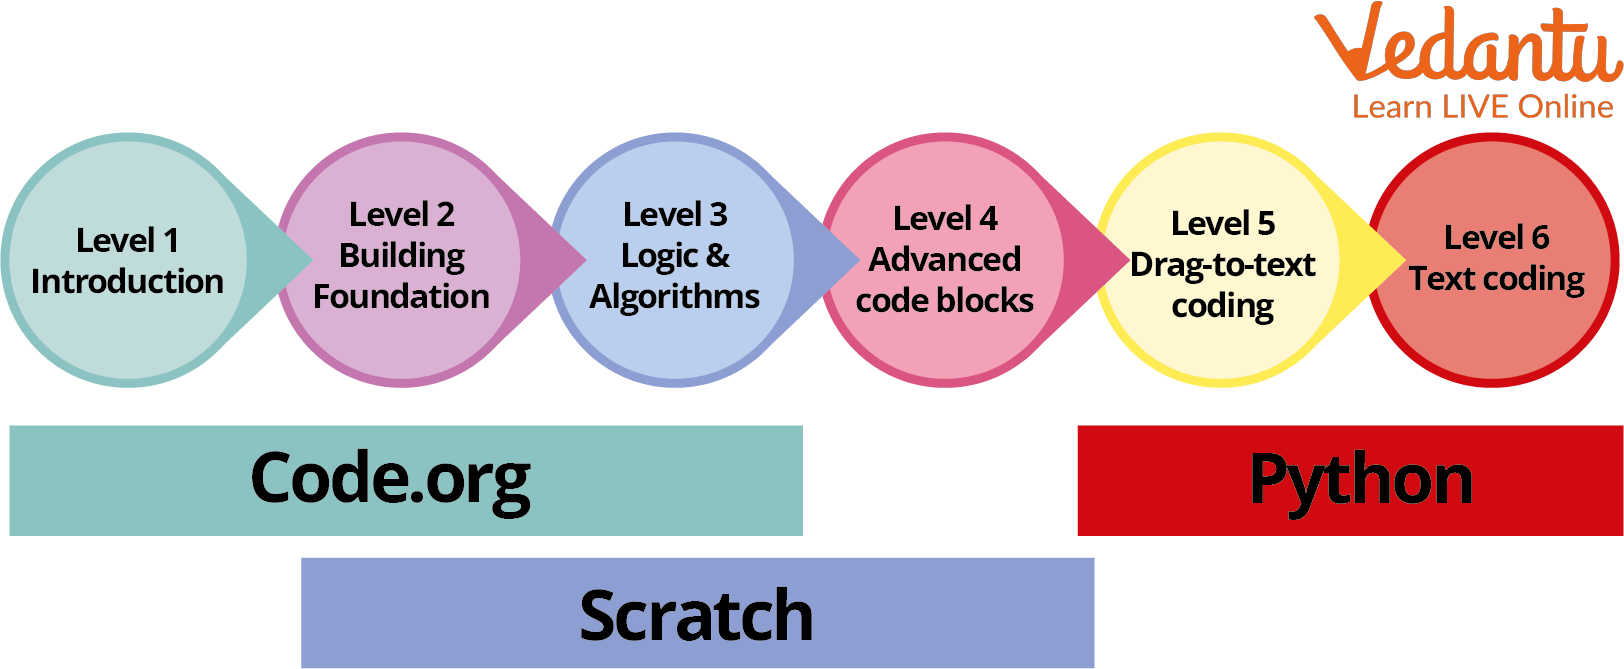 Steps for Coding